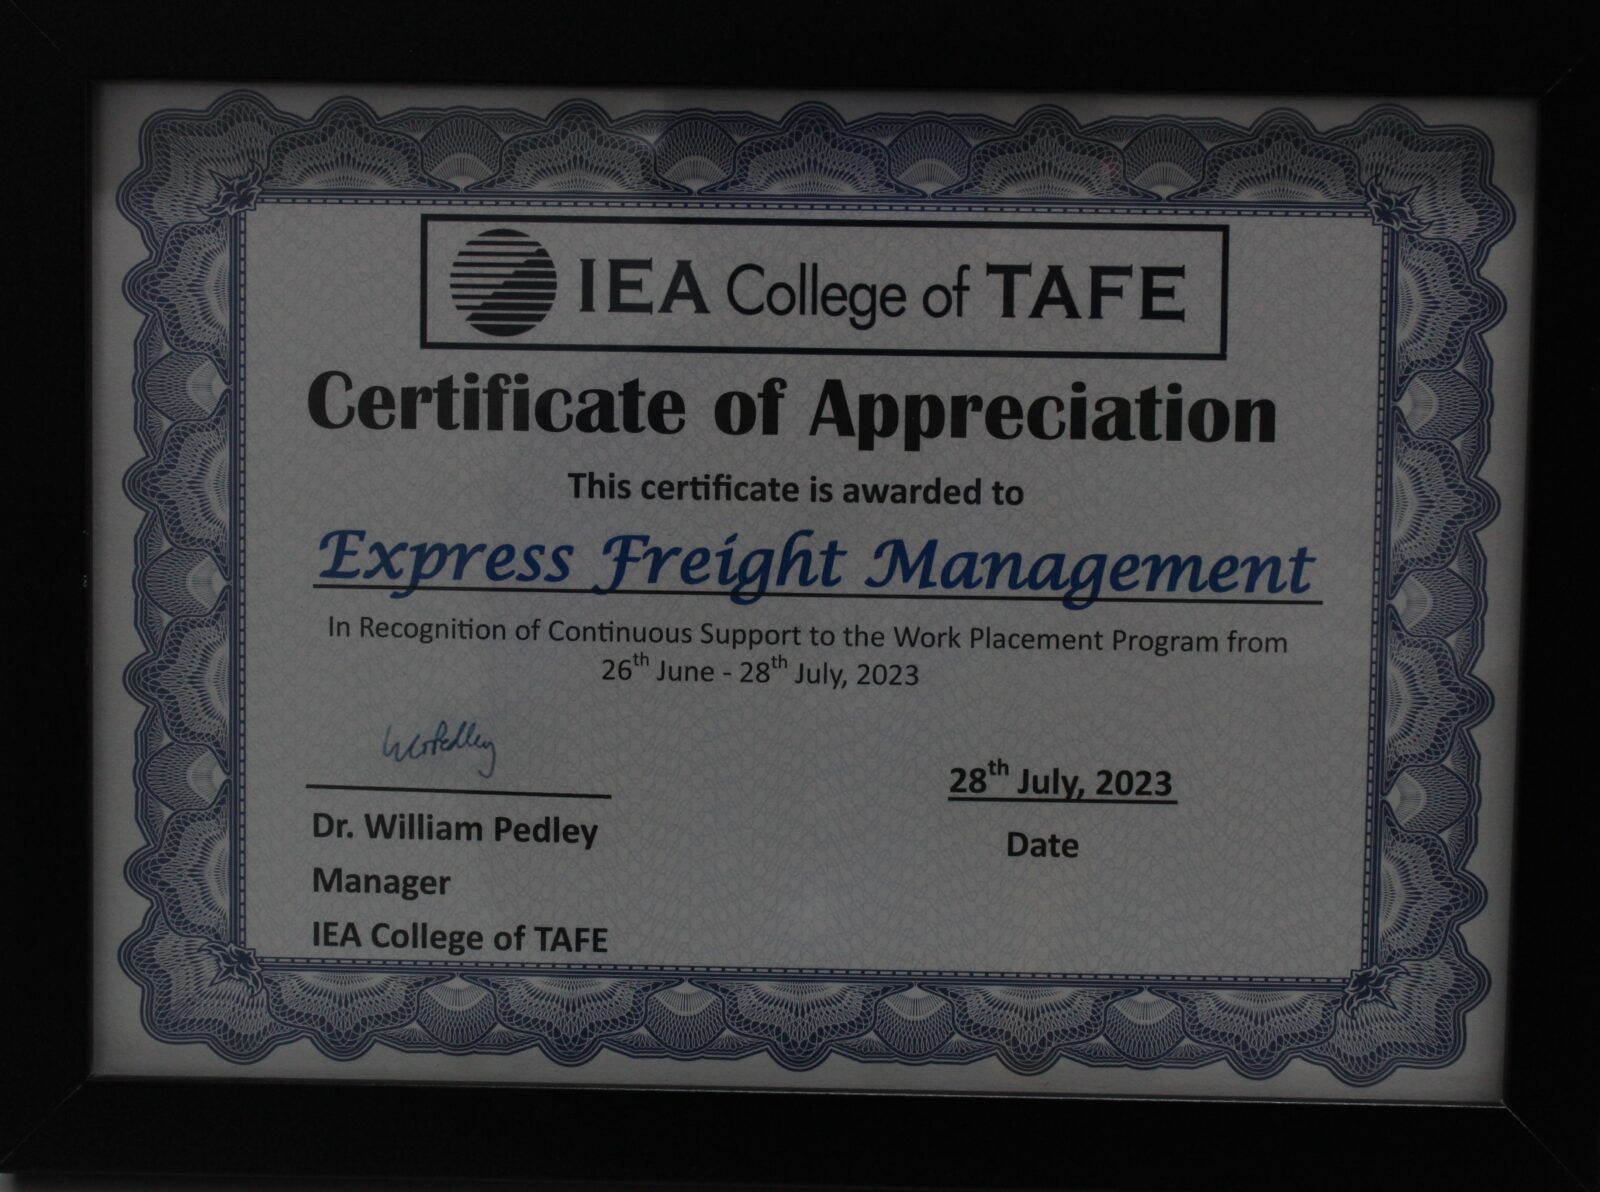 EFM certificate if appreciation express freight management